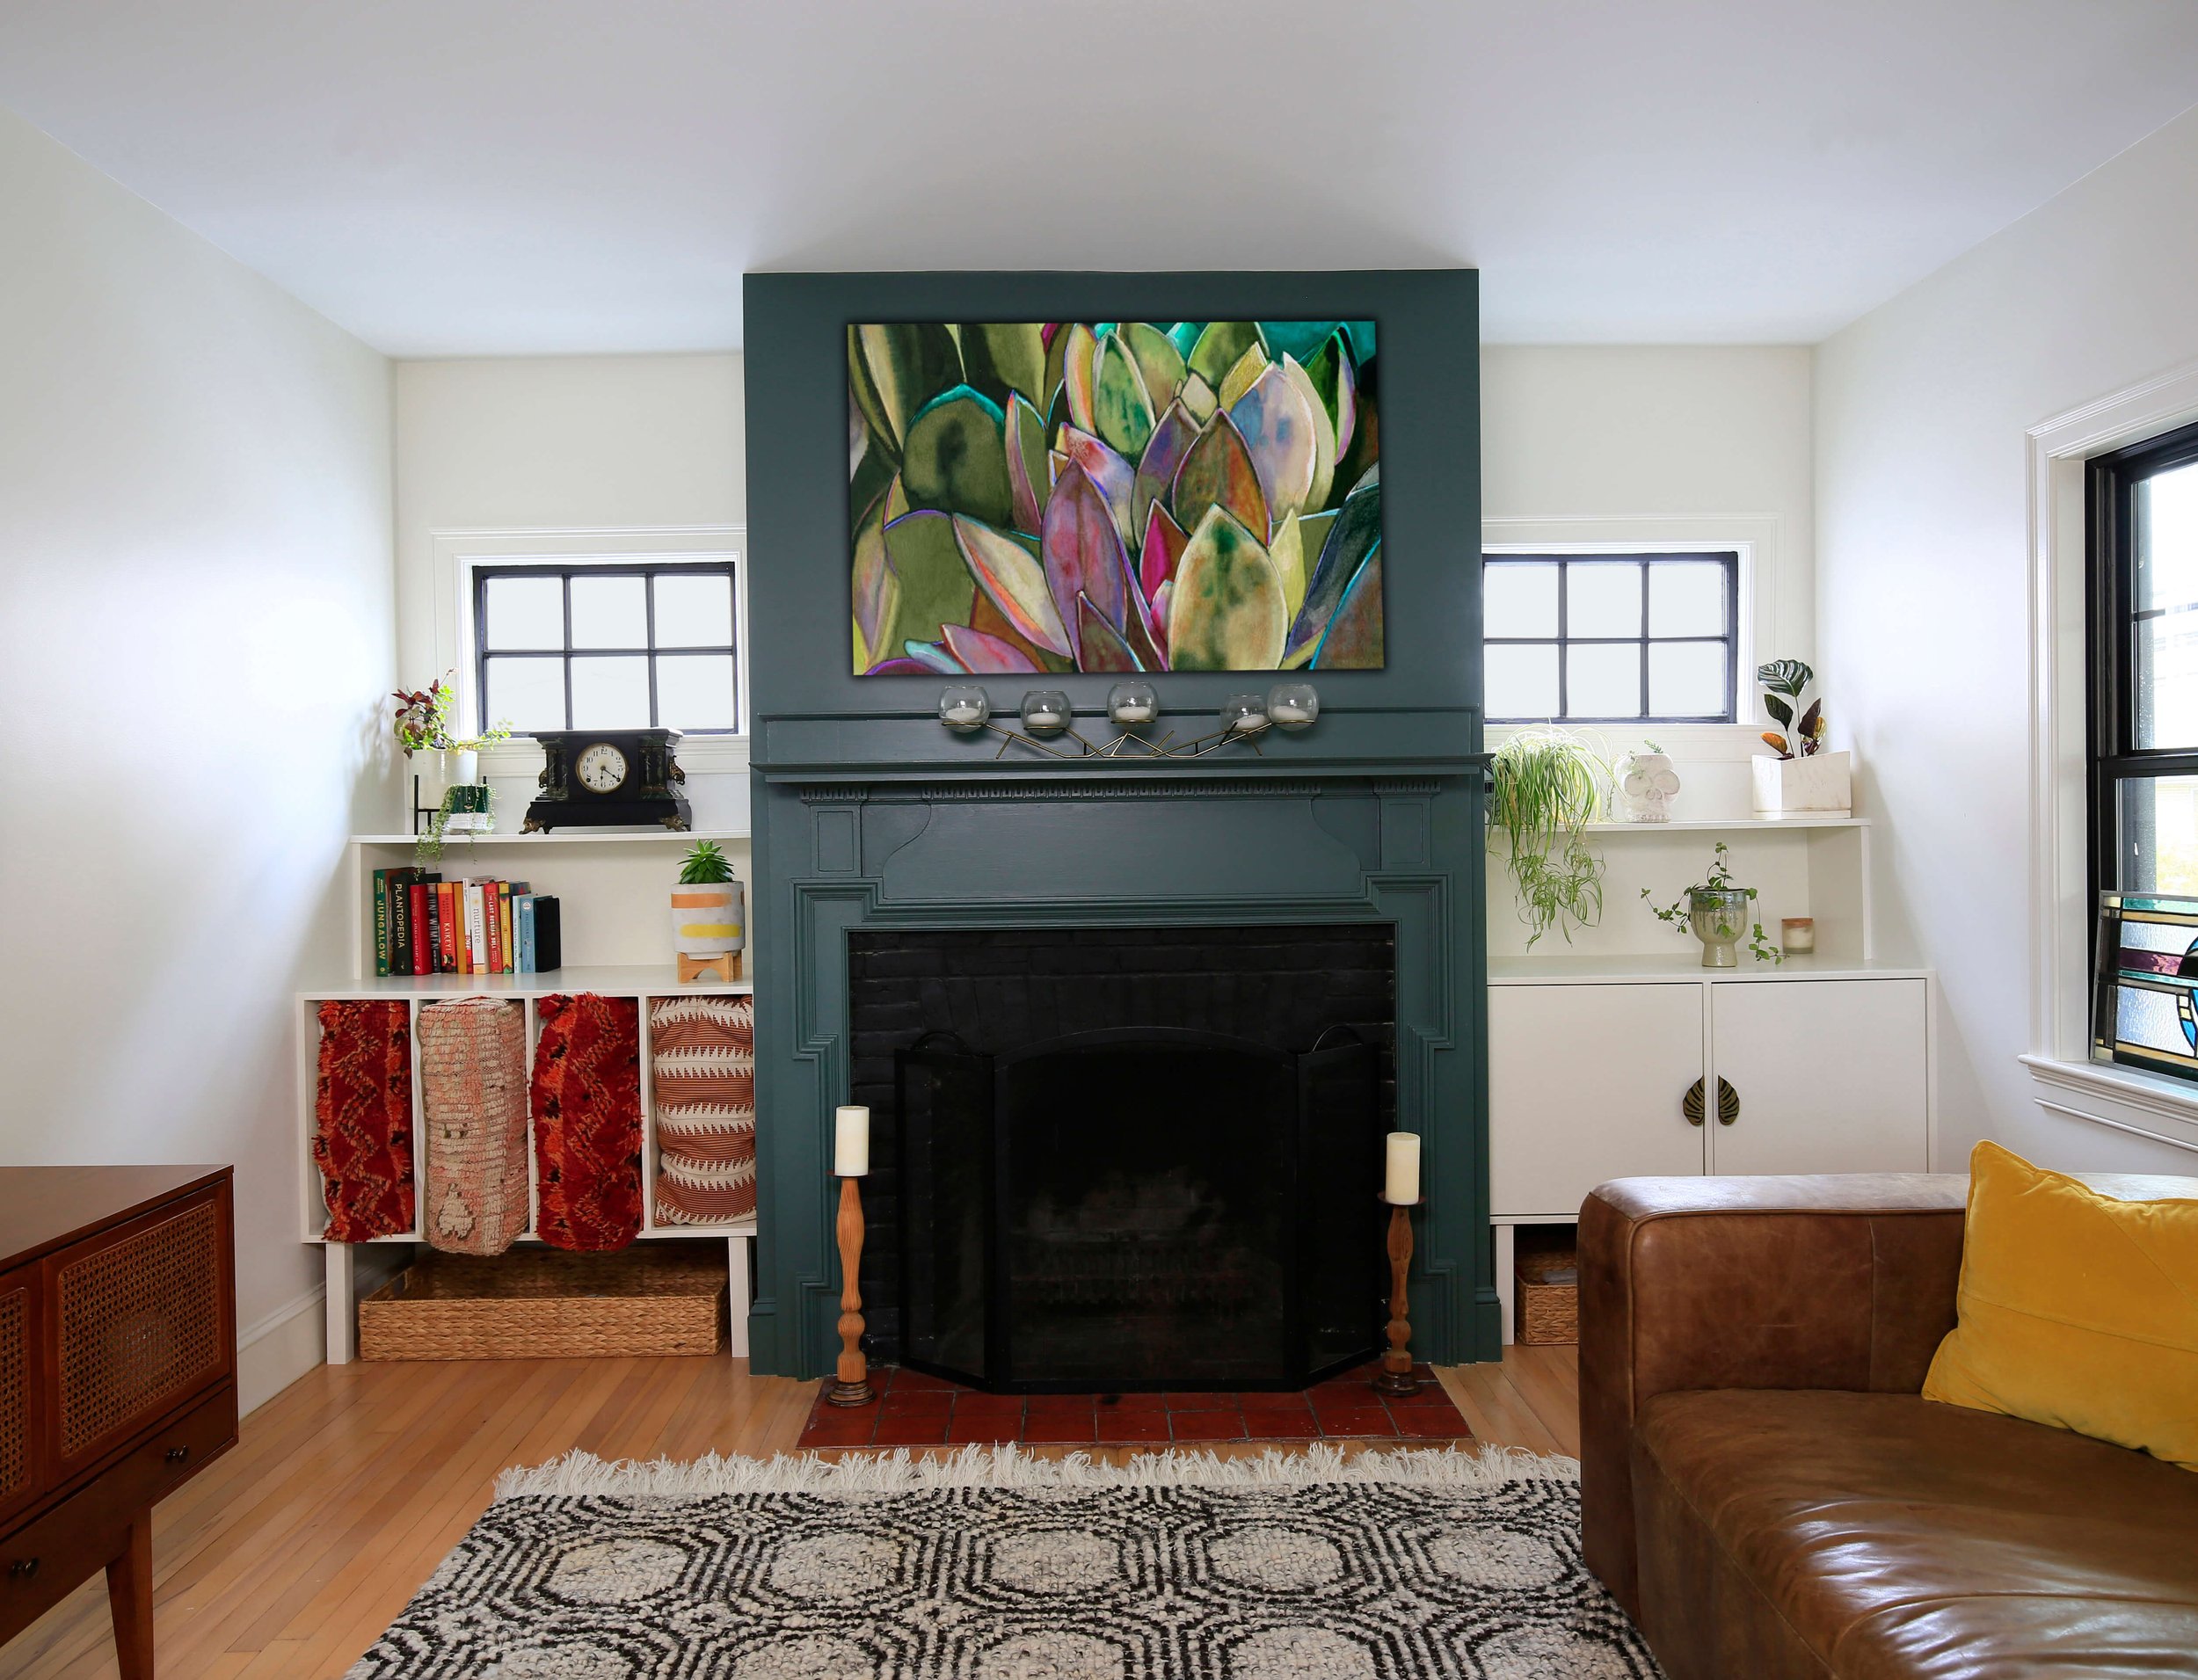 design 2 order julie h sheridan interior design color house residential living room with art.jpg